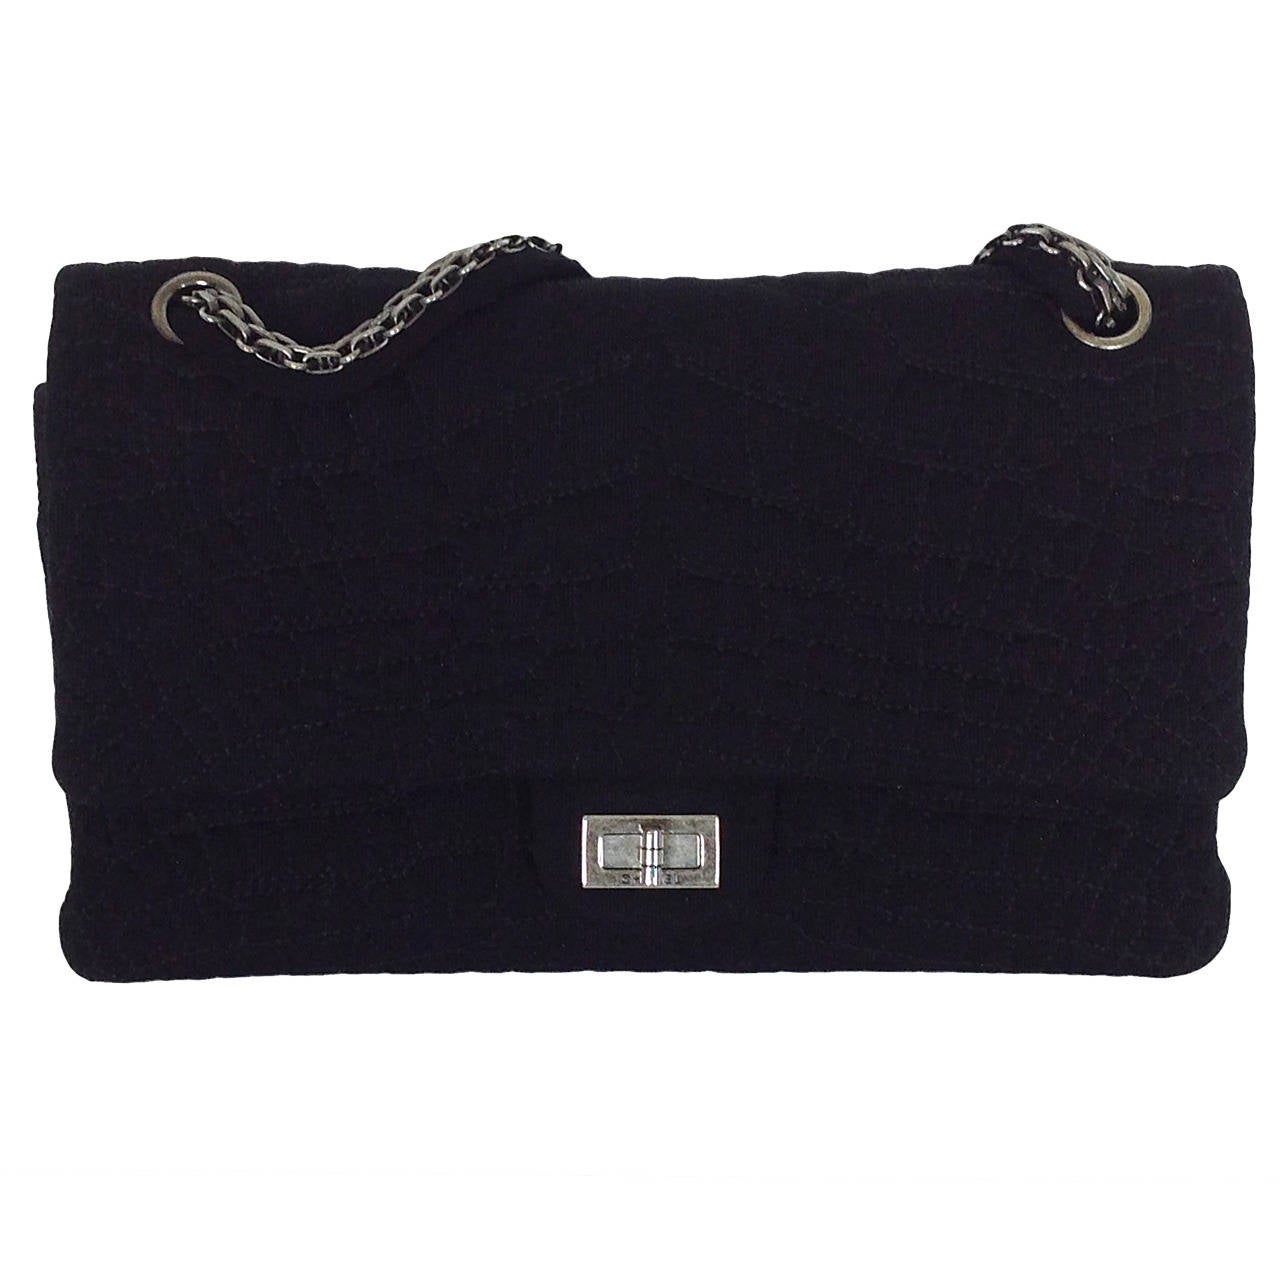 Chanel black jersey classic double flap handbag                    11 inch